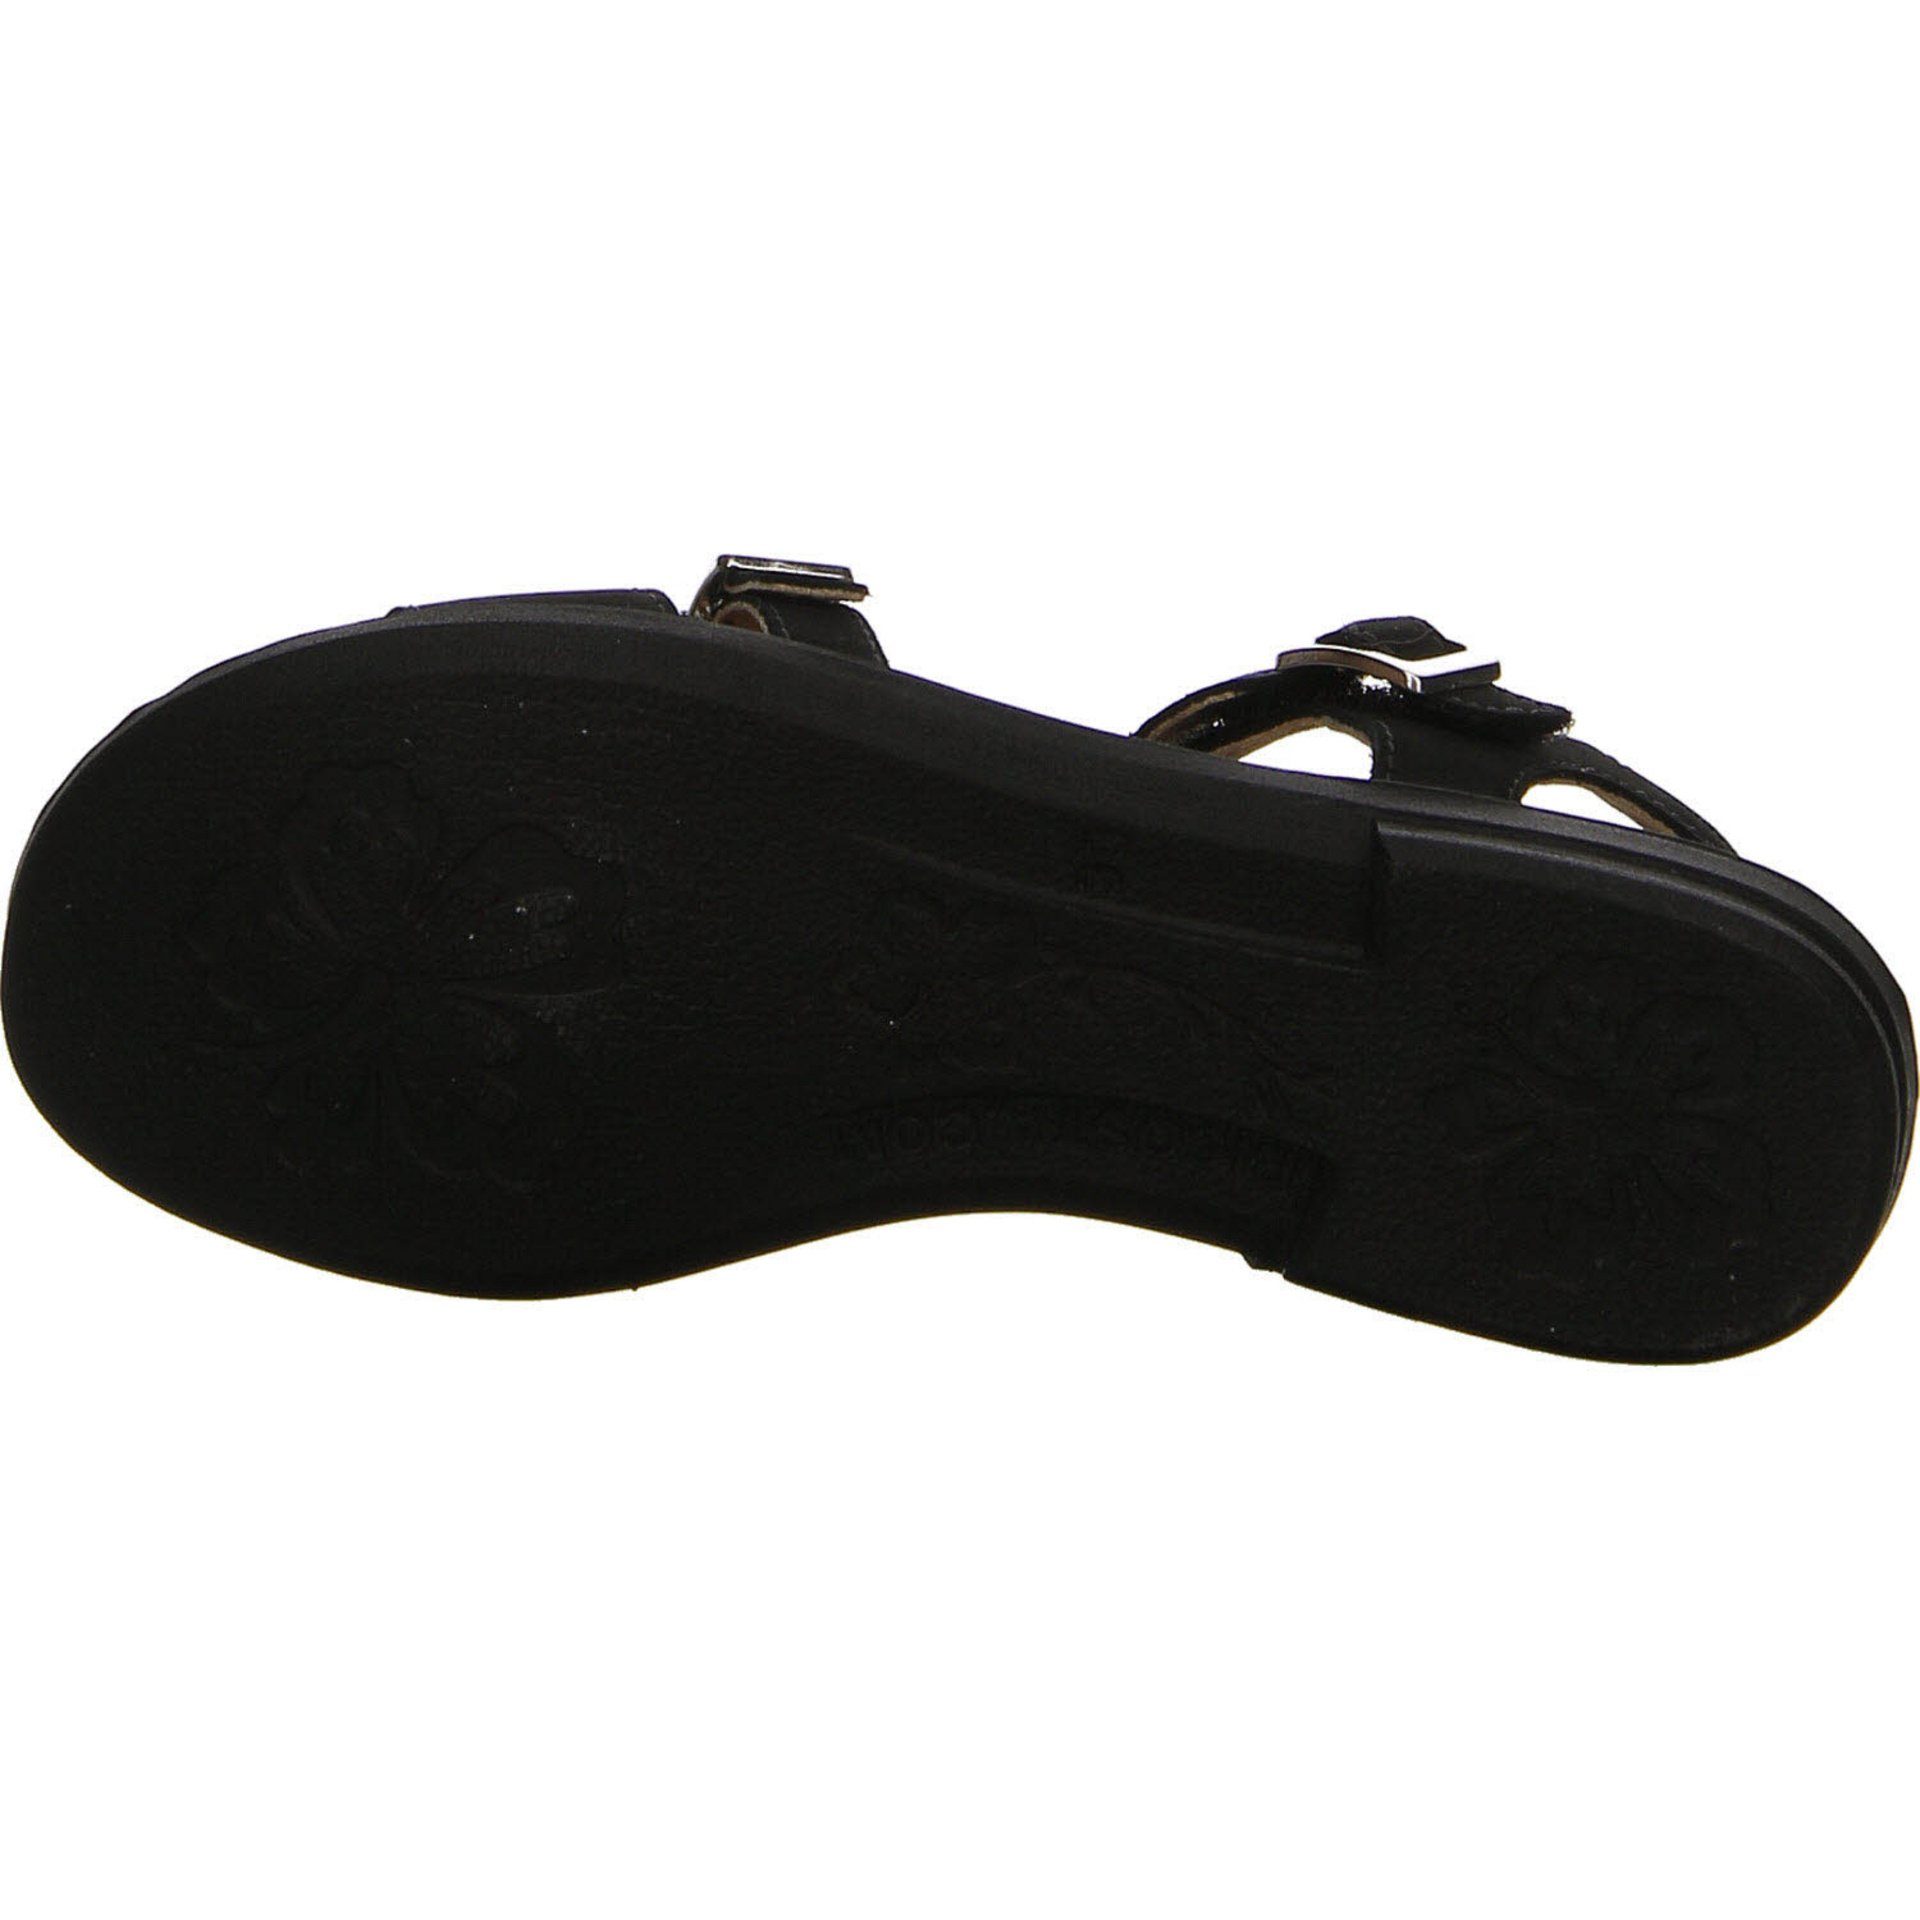 dunkel schwarz Sandale Ricosta Sandalen Glattleder Mädchen Kalja Sandalen Schuhe